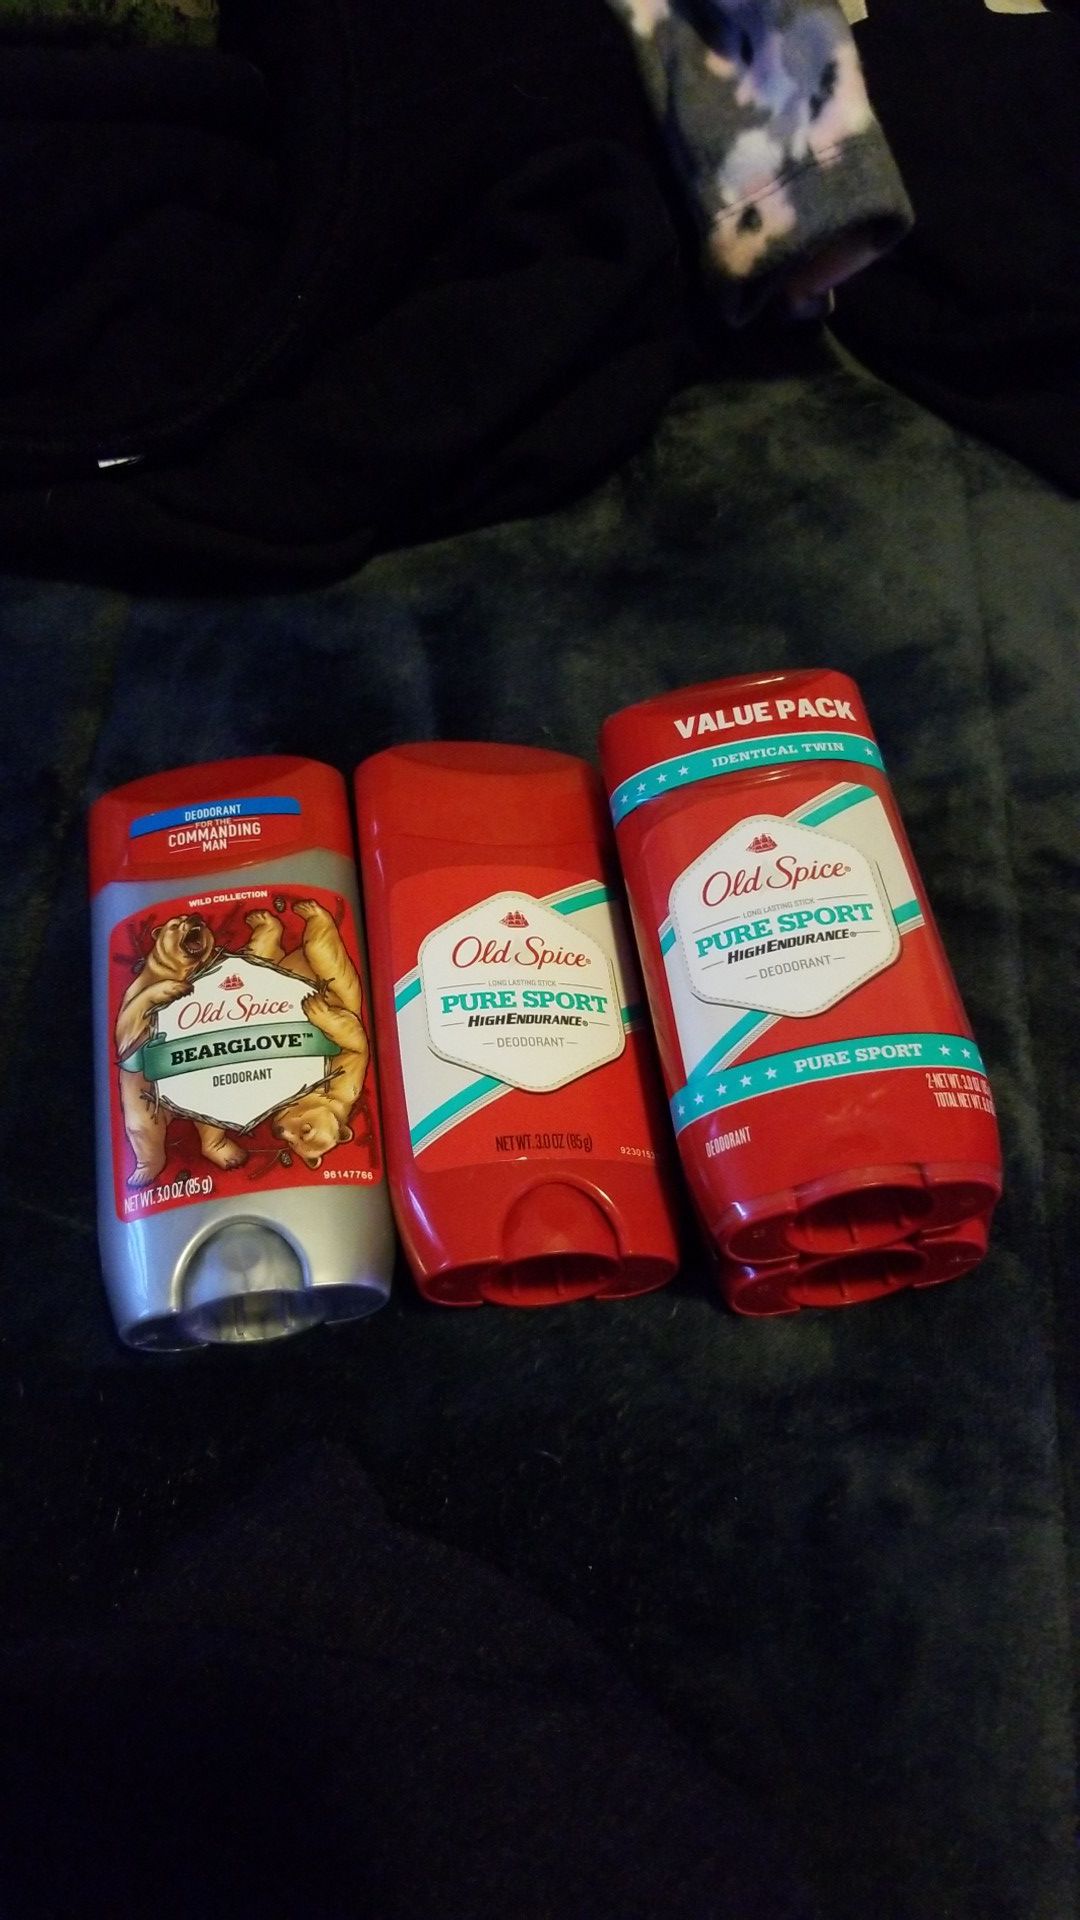 Old Spice Deodorant